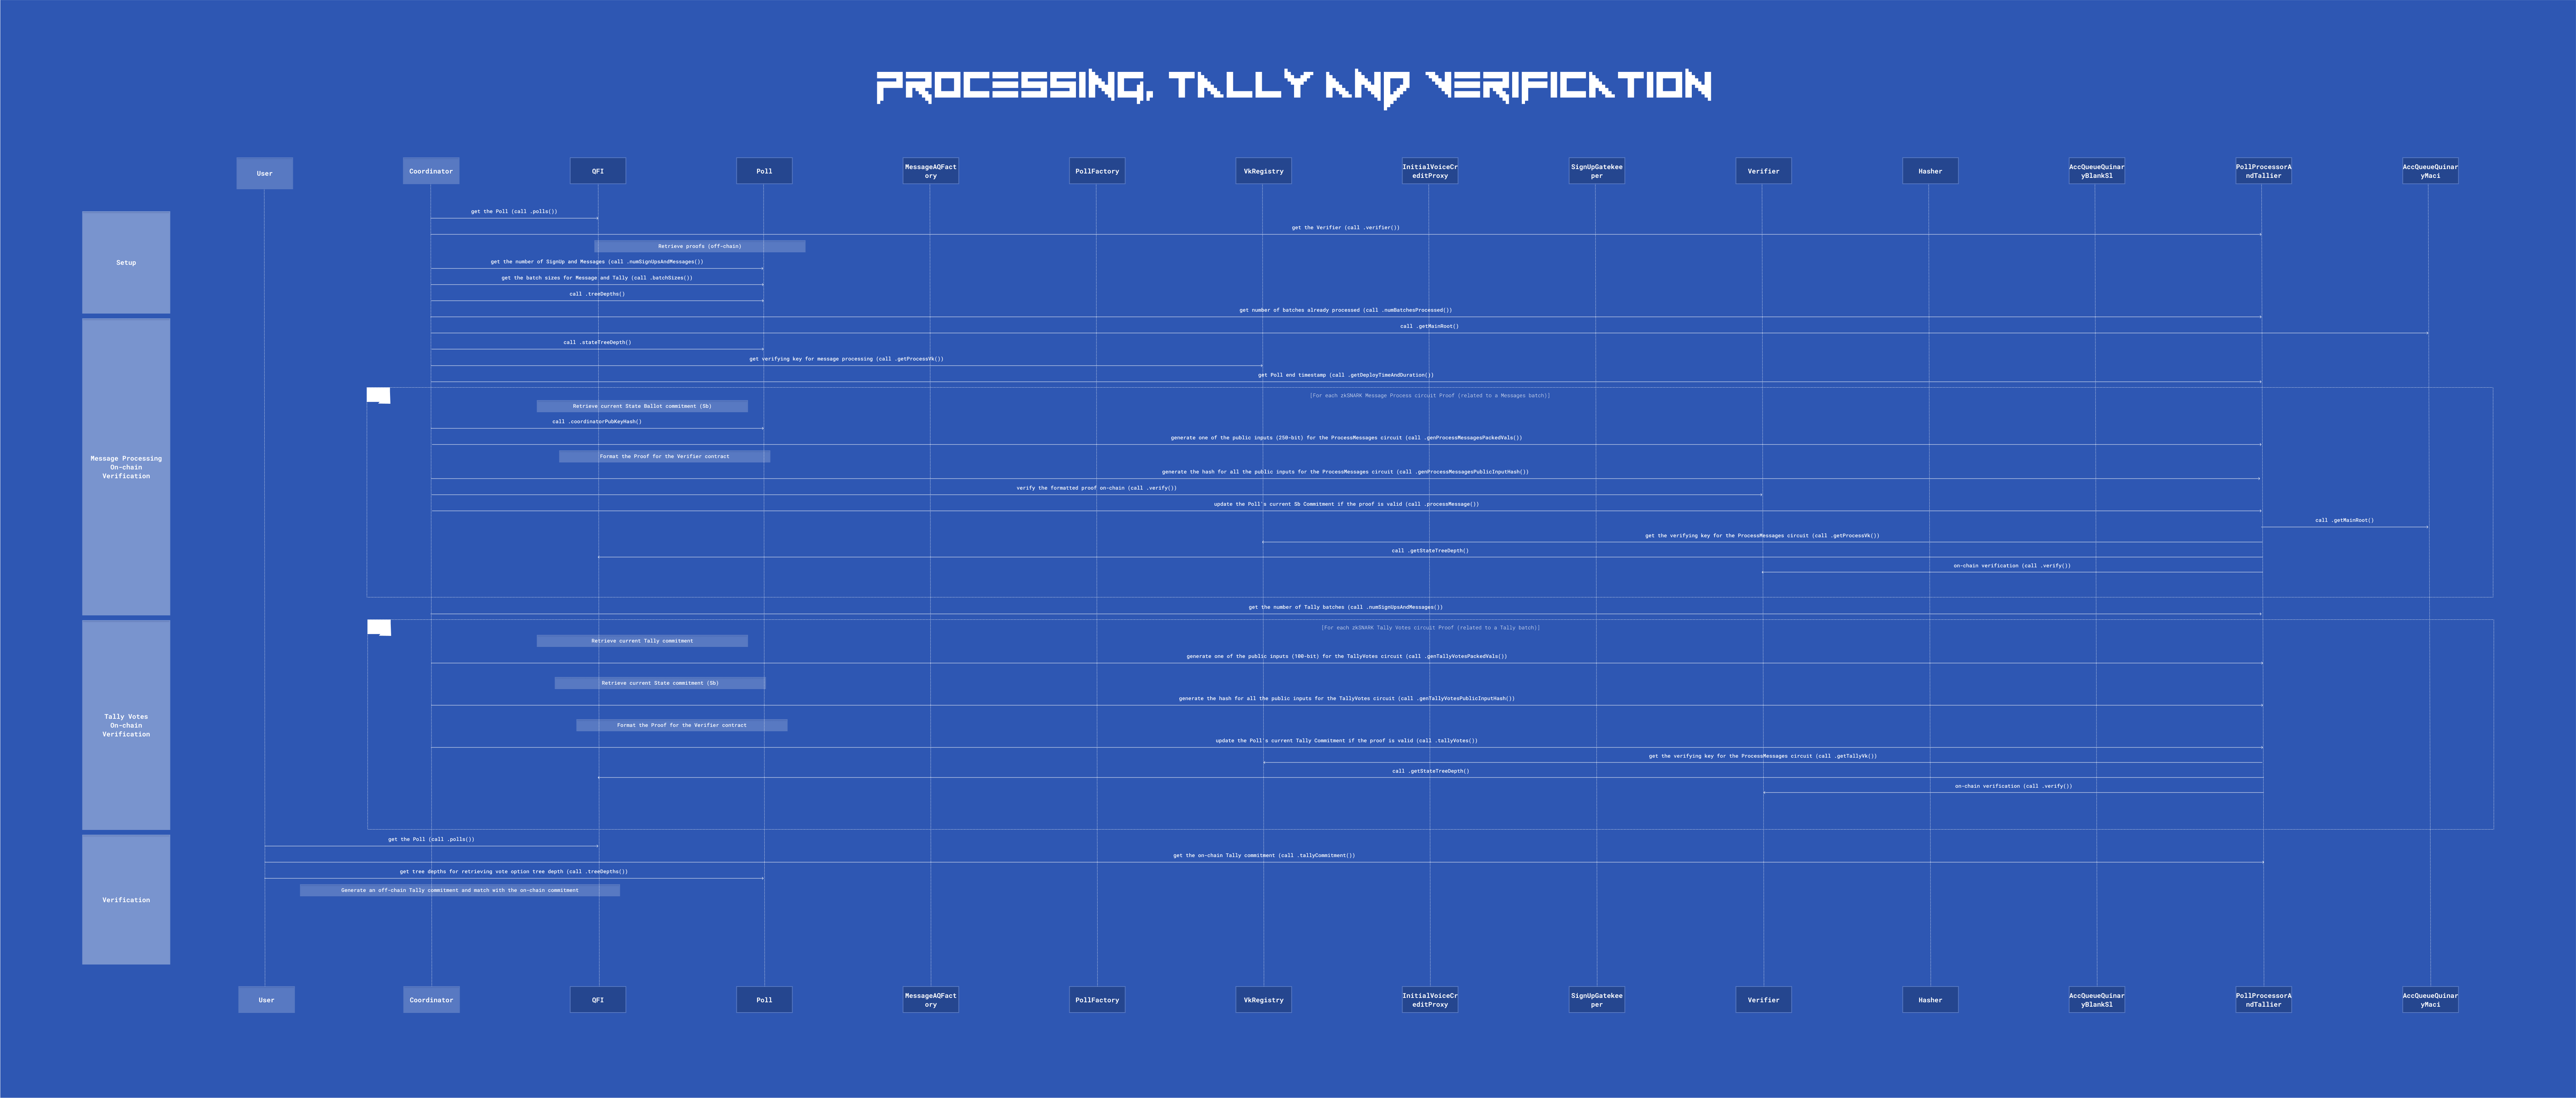 QFI processing, tally and verification diagram